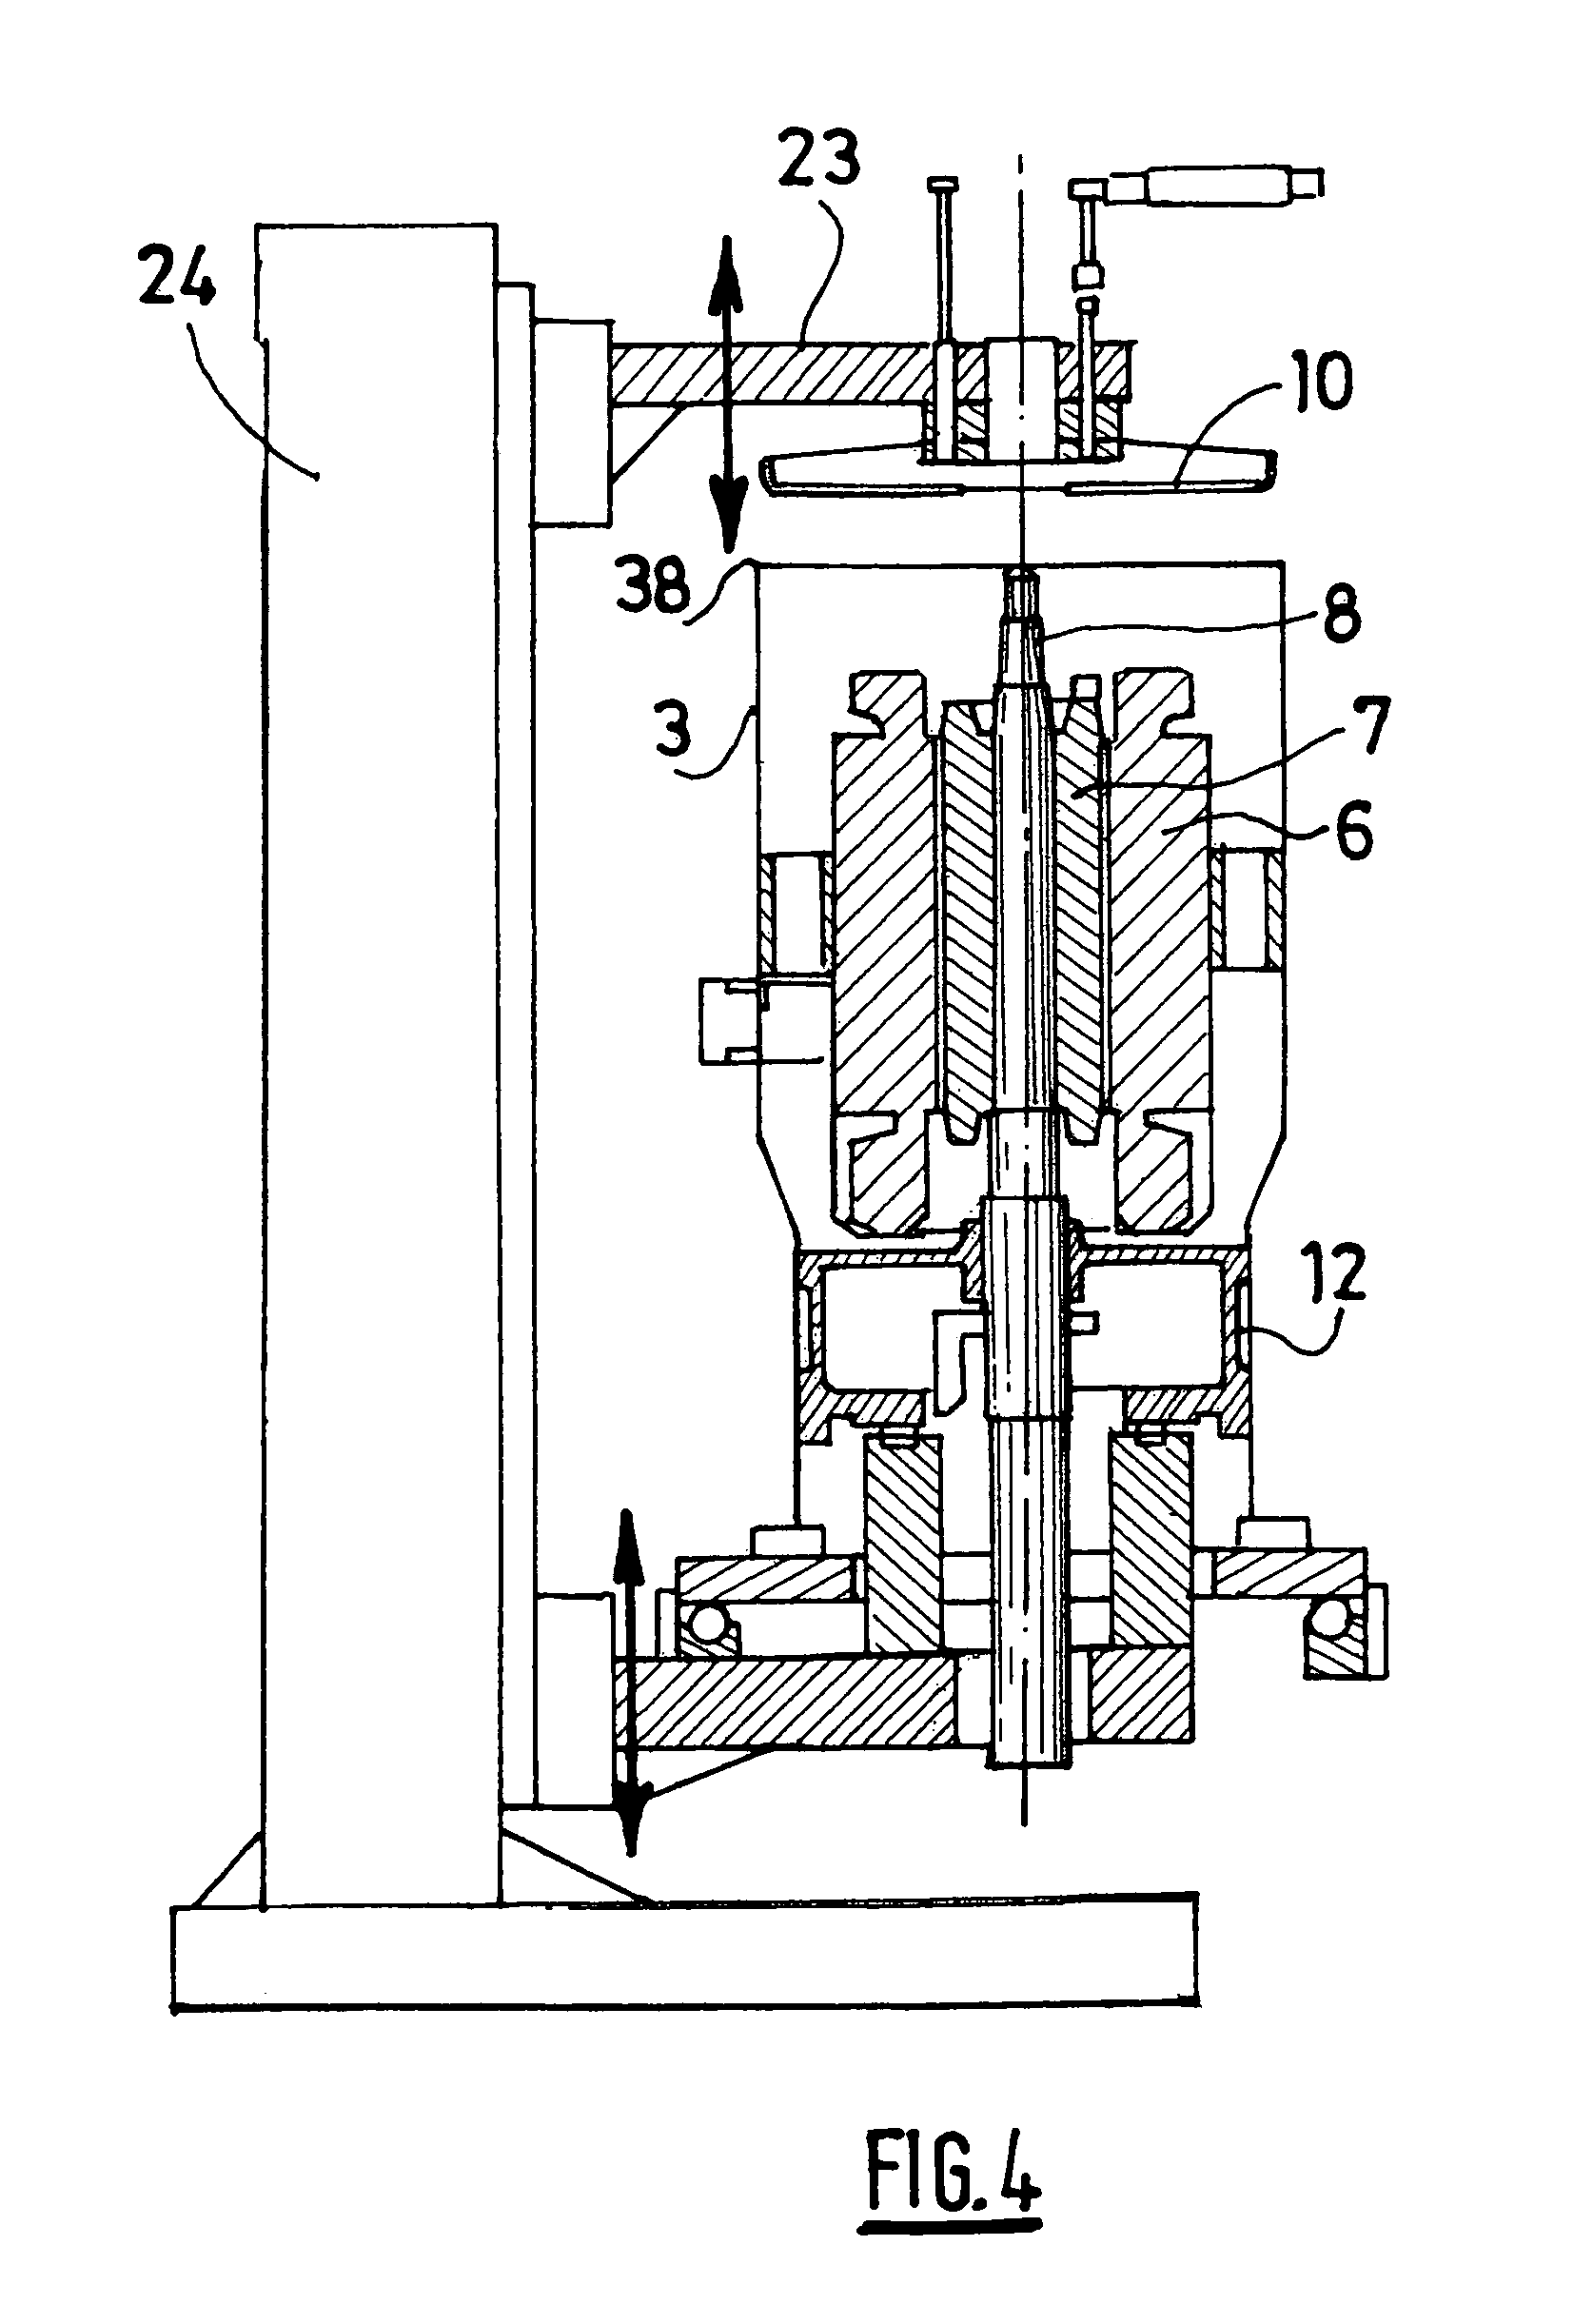 Method of assembling a refrigerating compressor